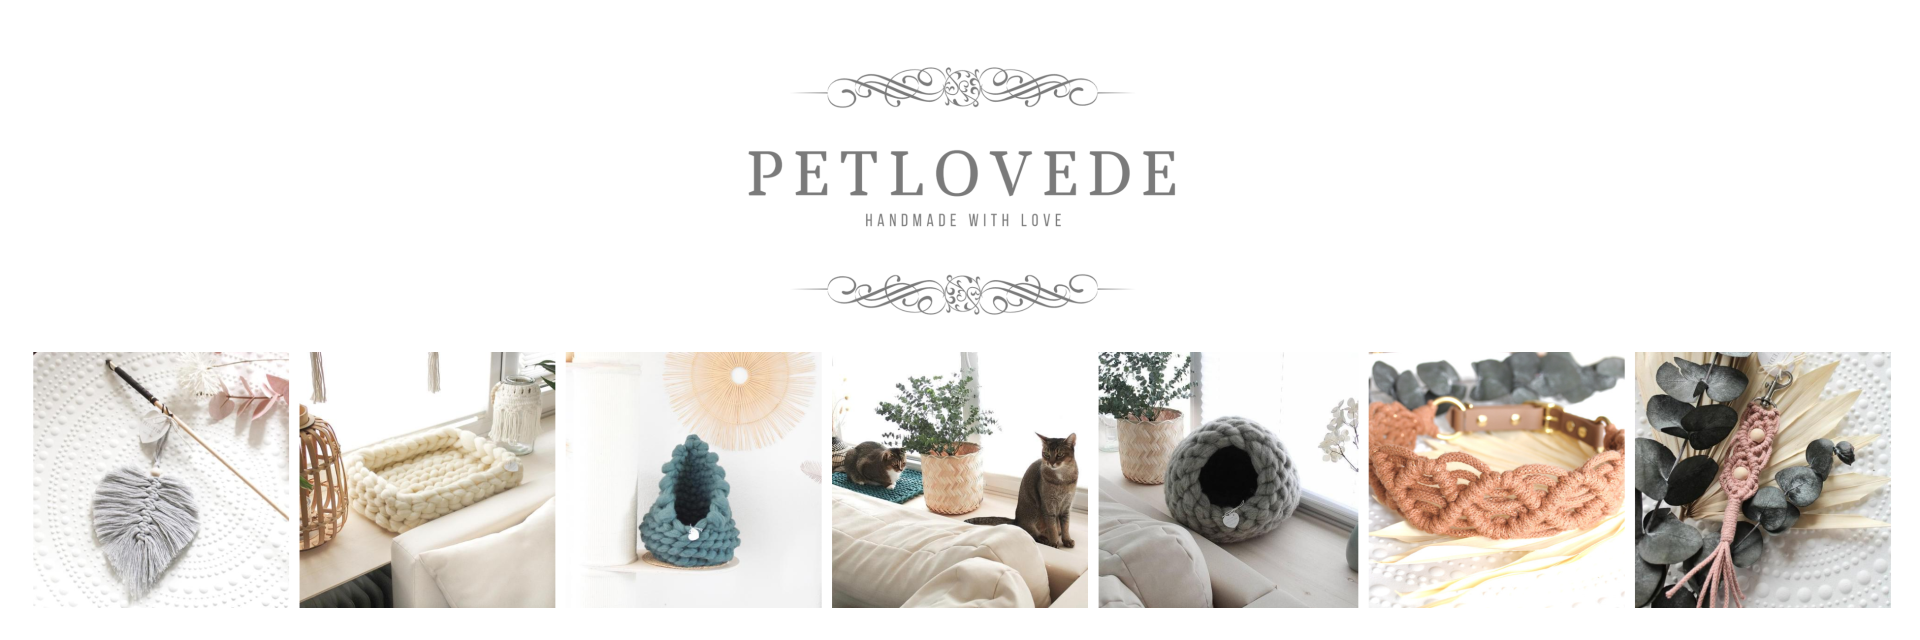 Logo PETLOVEDE Handmade with love